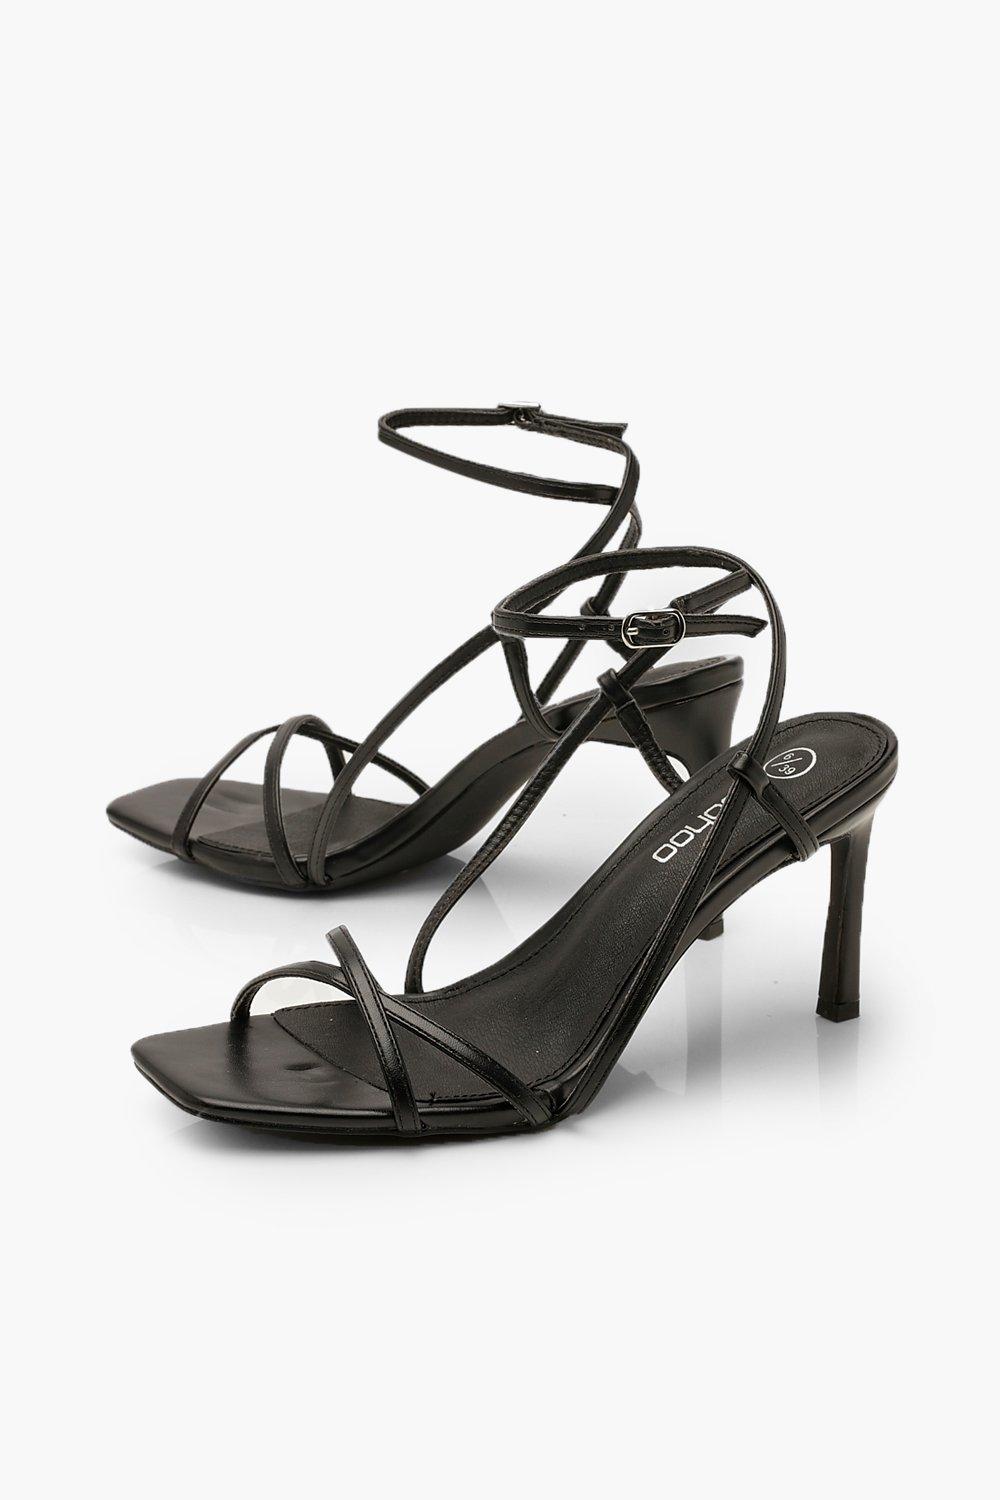 wide black strappy heels